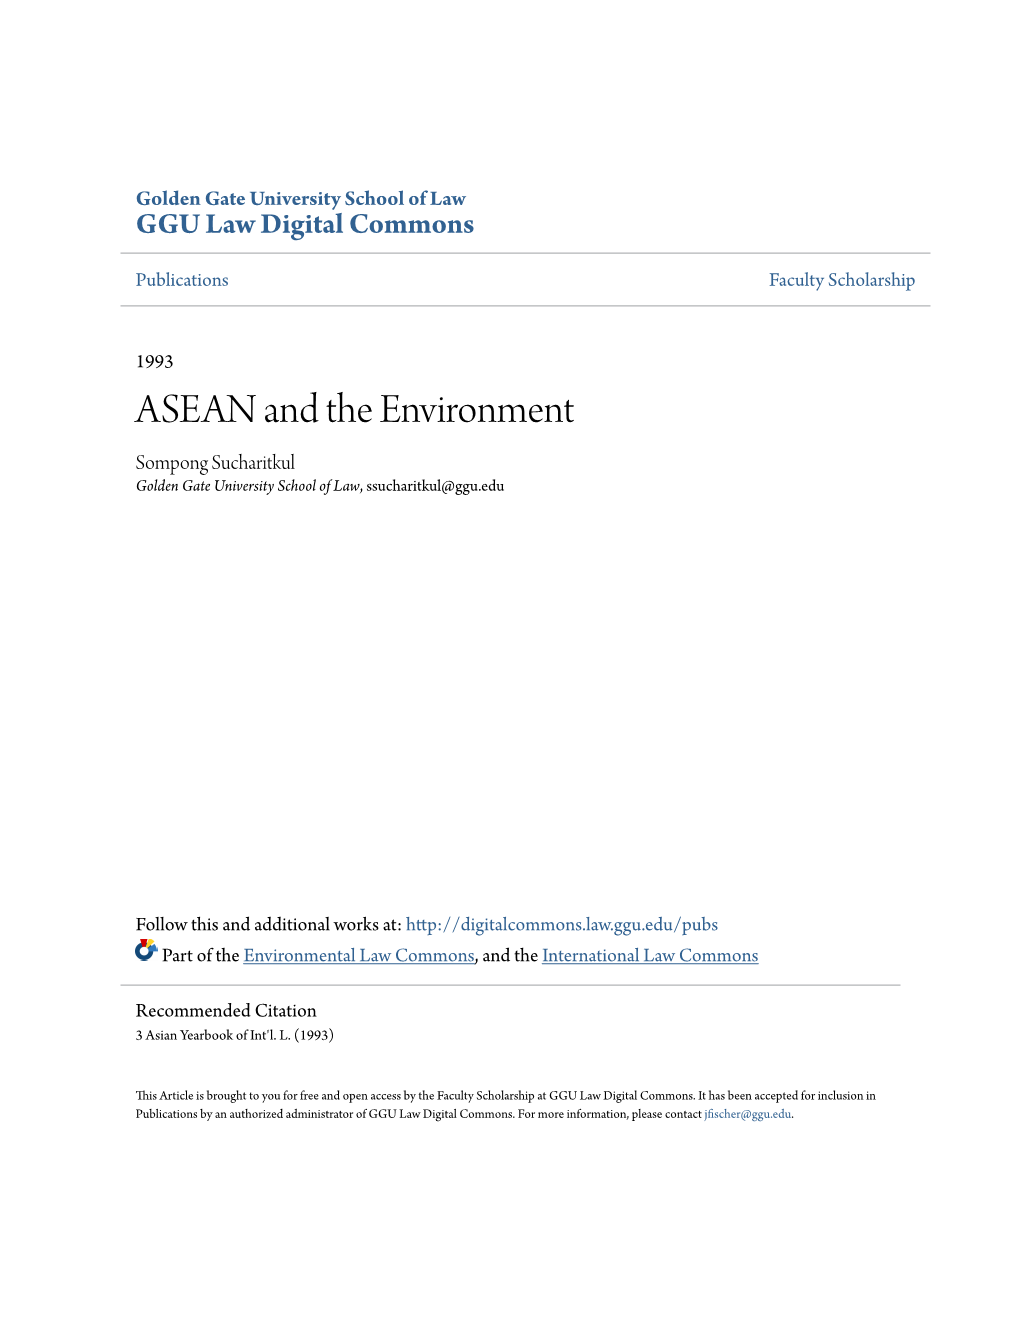 ASEAN and the Environment Sompong Sucharitkul Golden Gate University School of Law, Ssucharitkul@Ggu.Edu